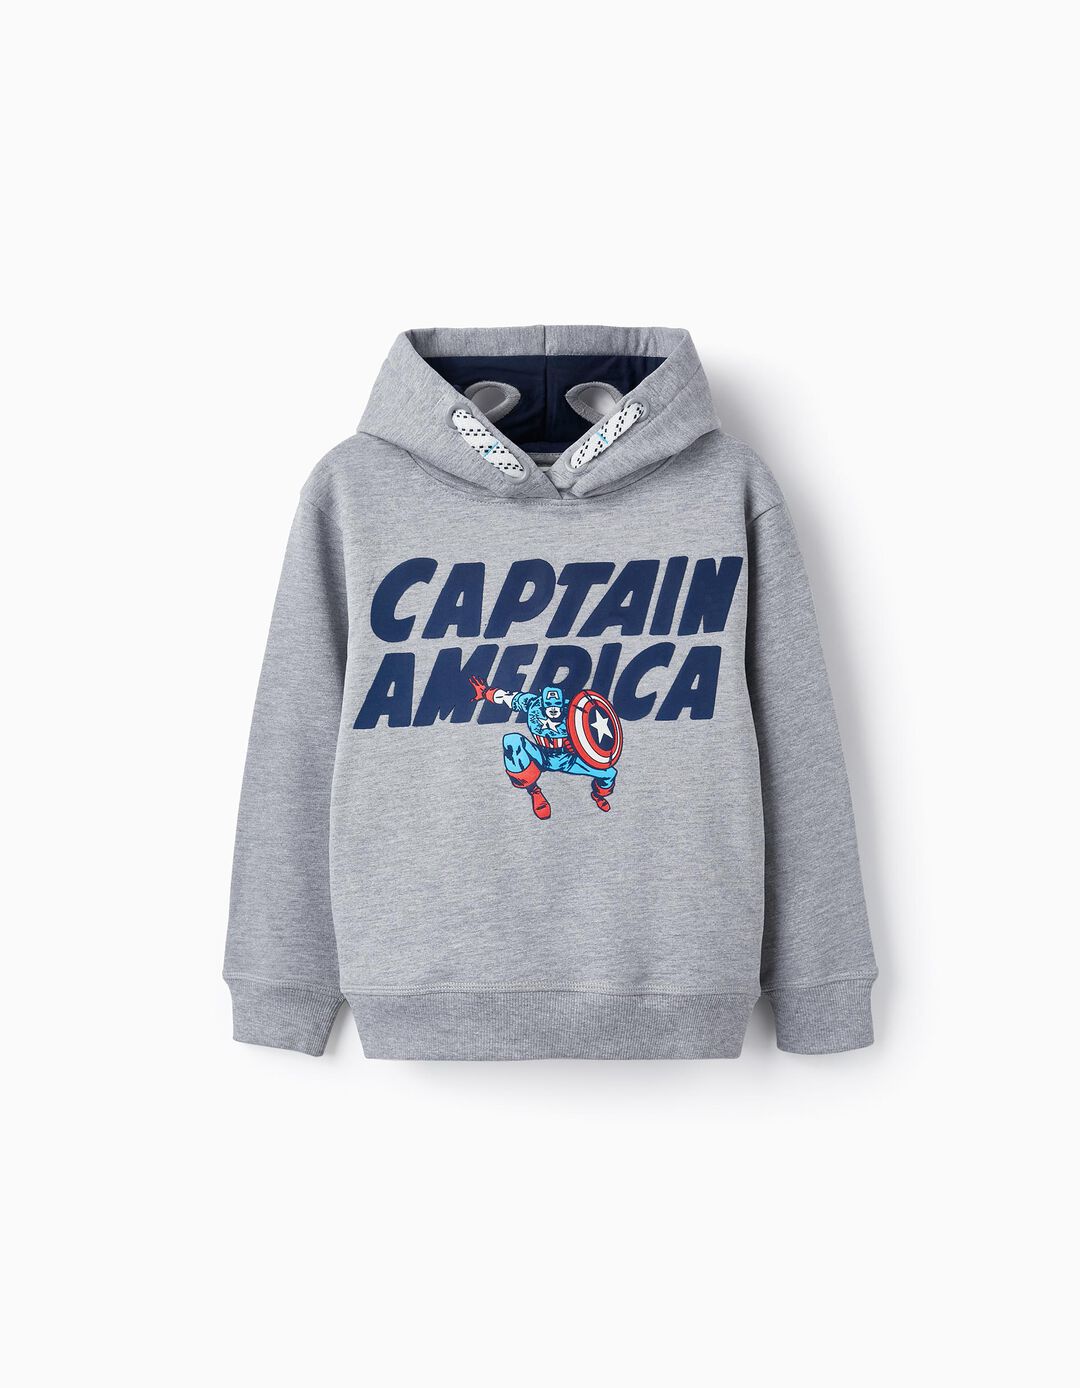 Cotton Hooded Sweatshirt for Boys 'Captain America', Gray